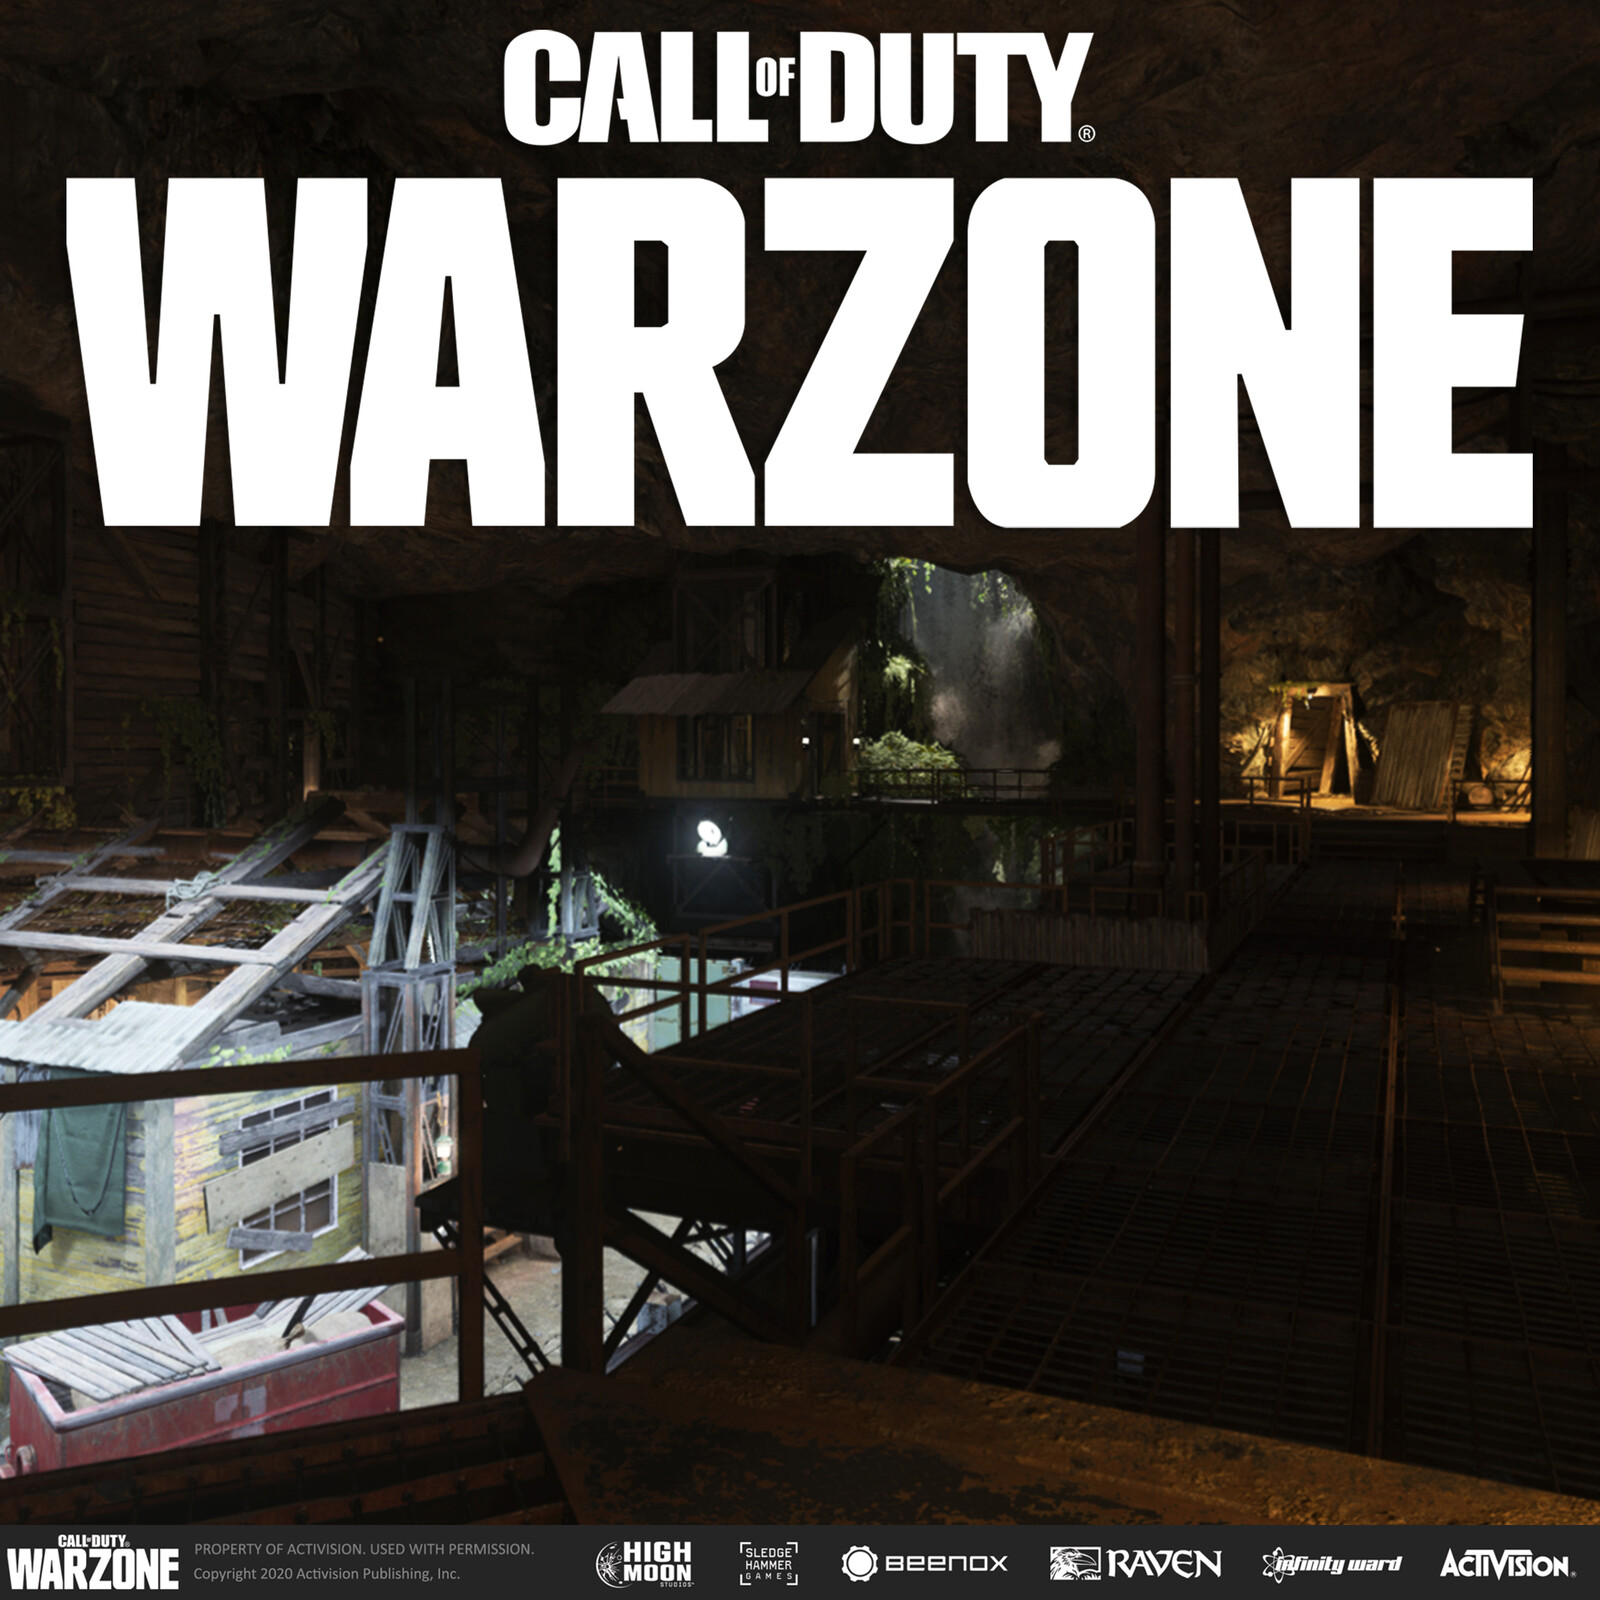 Call Of Duty: Vanguard Warzone - Gulag